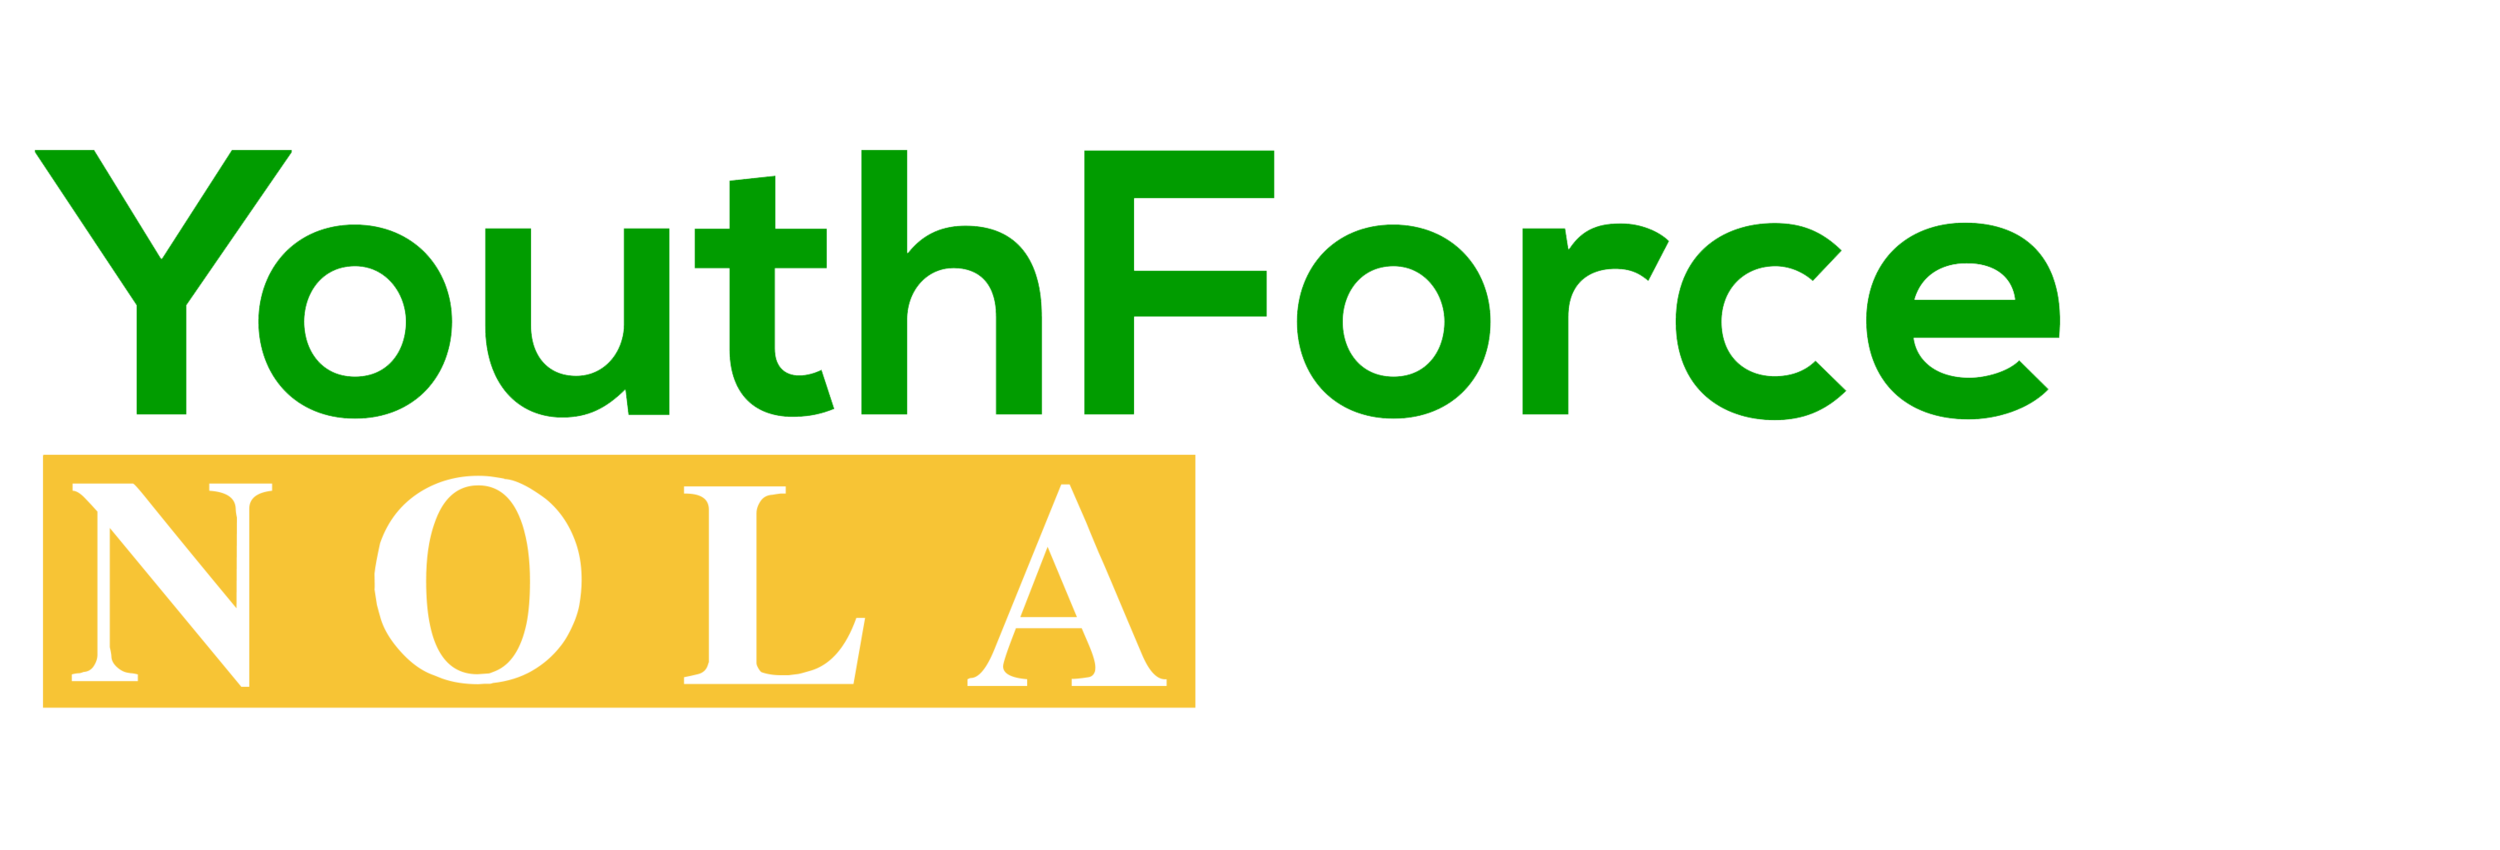 youthforce nola logo